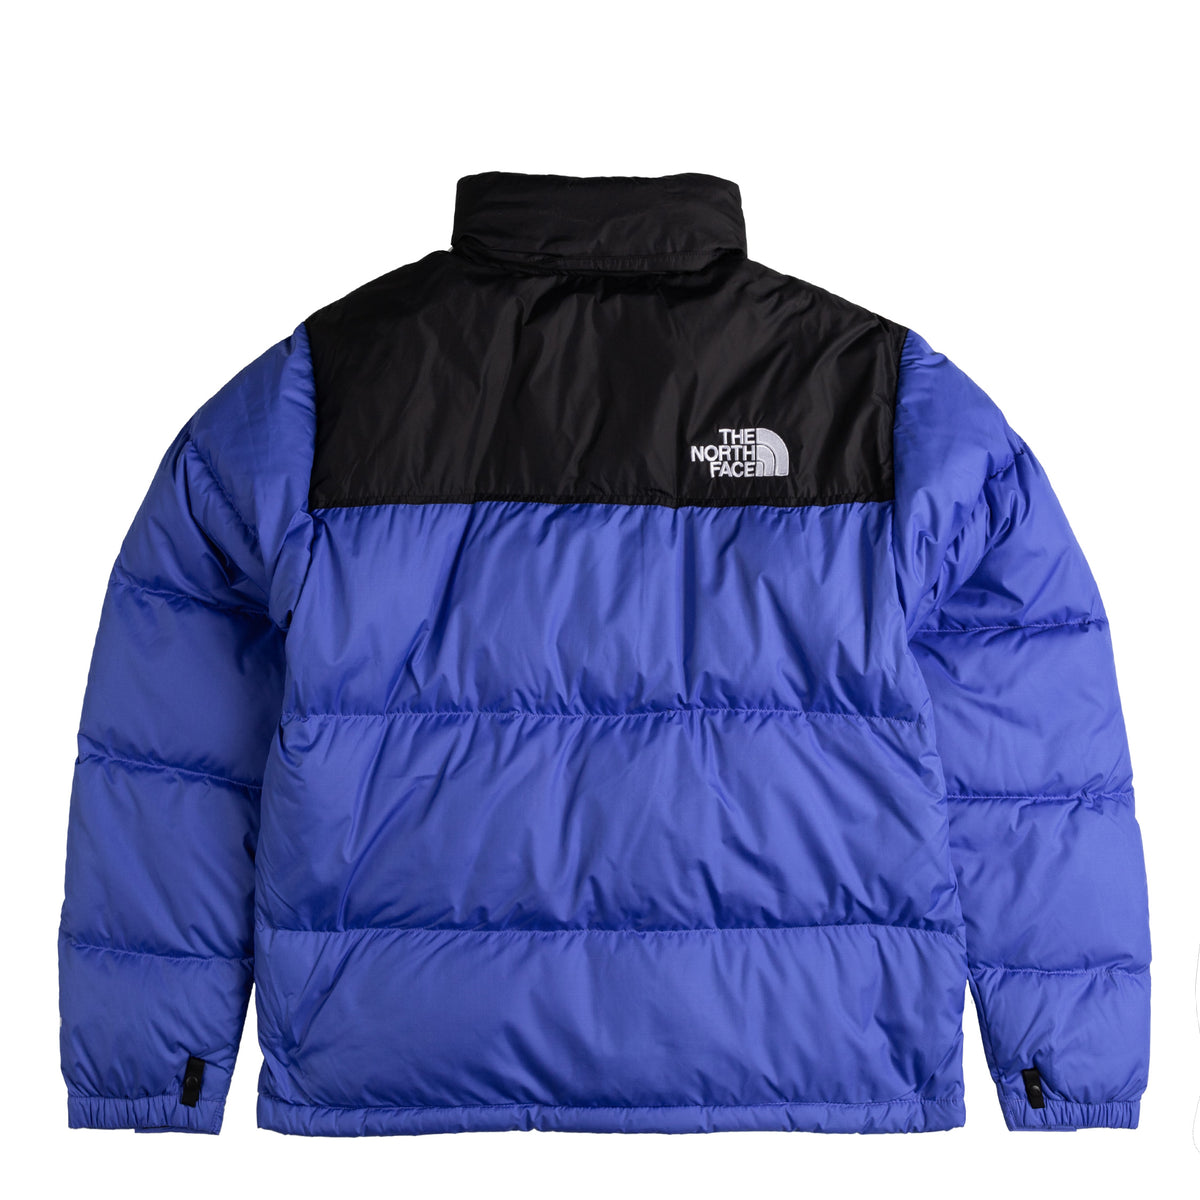 The North Face 1996 Retro Nuptse Jacket » Buy online now!